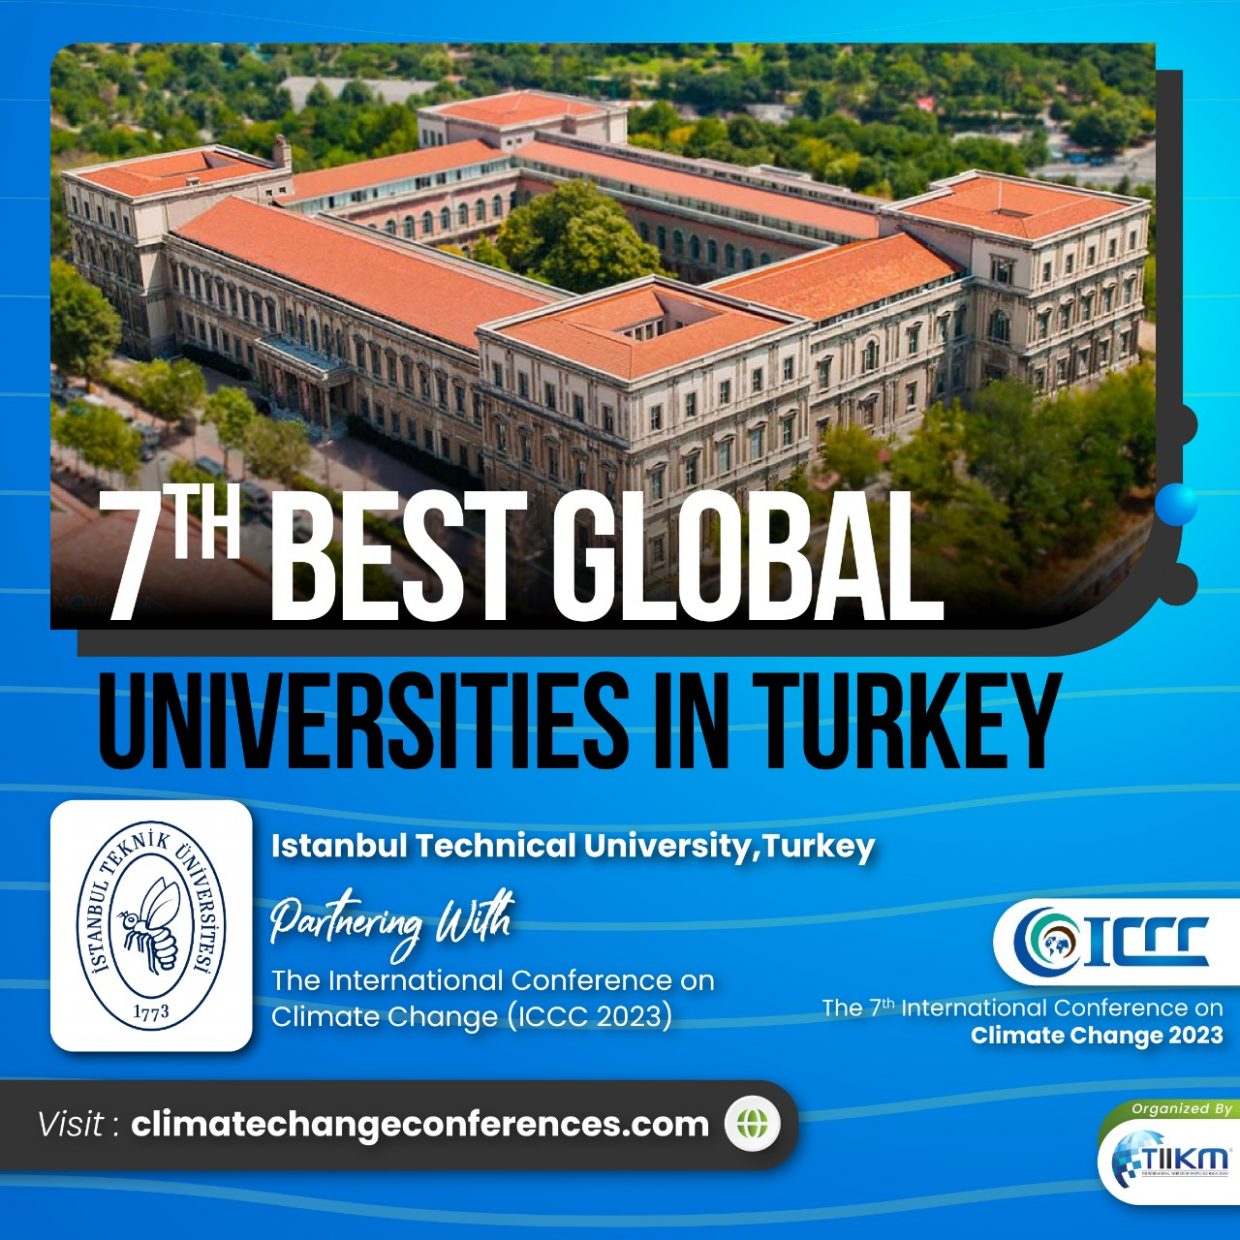 Istanbul Technical University, Turkey